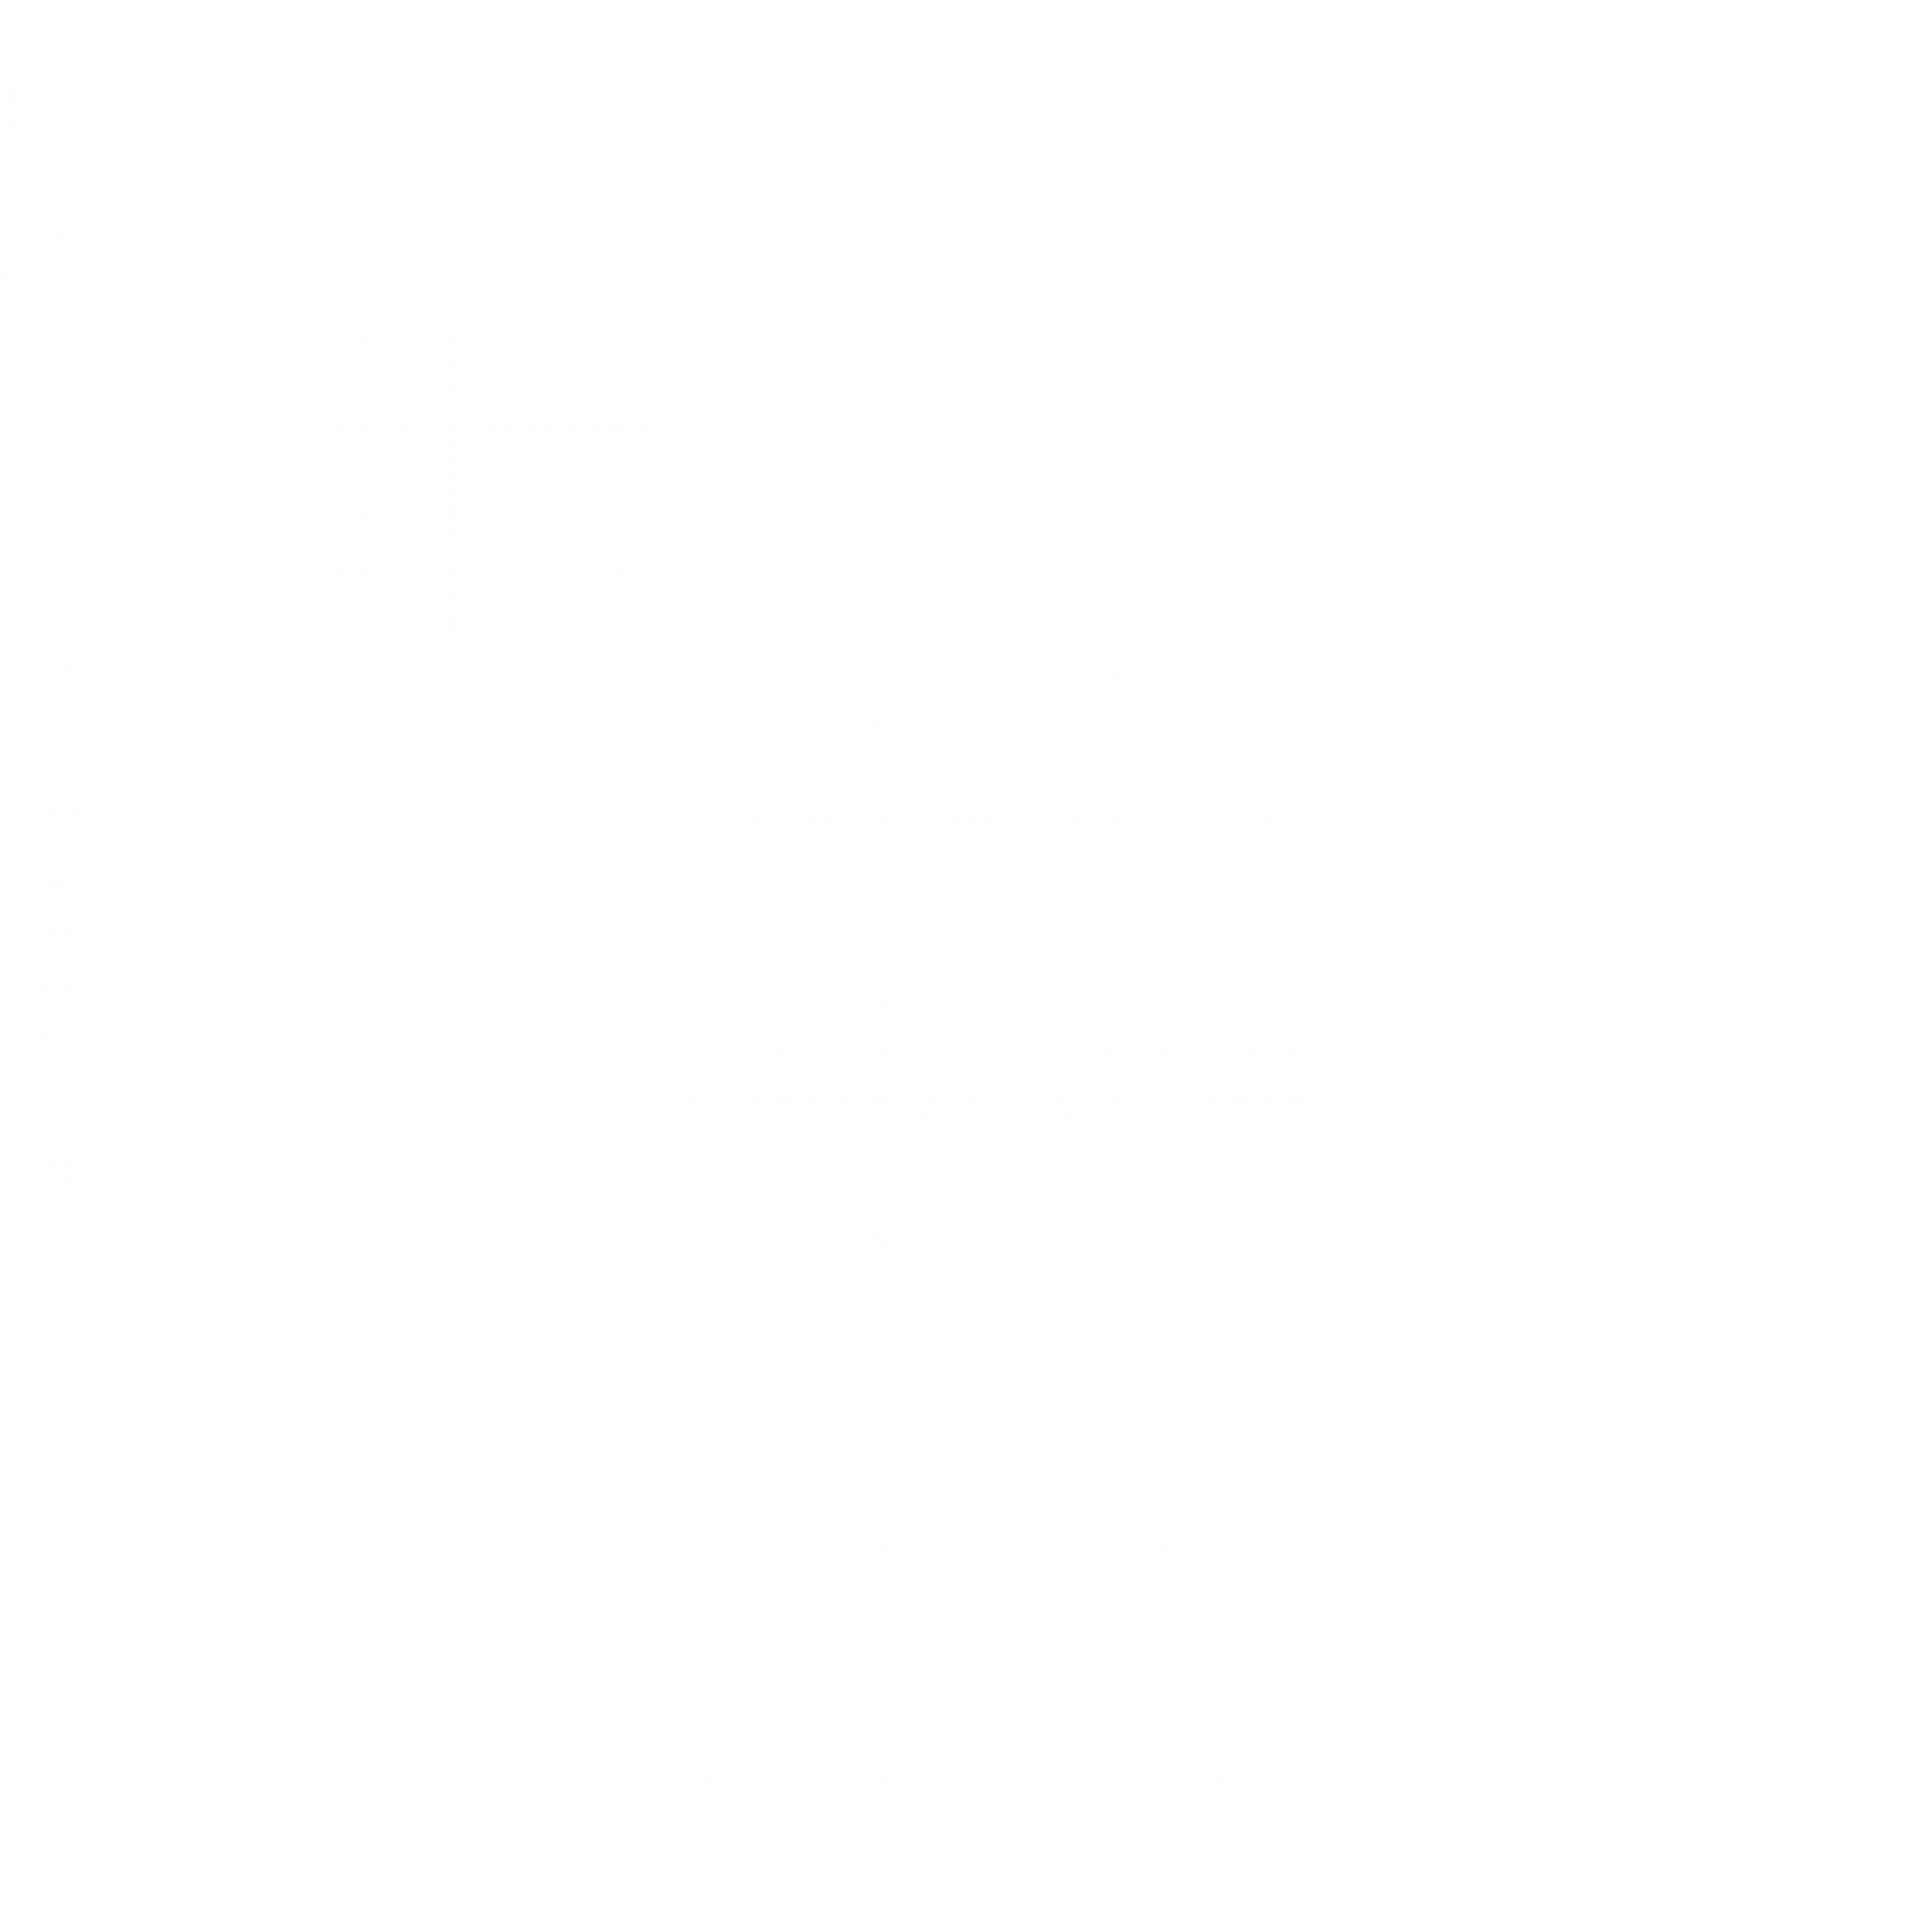 Death Stranding logo